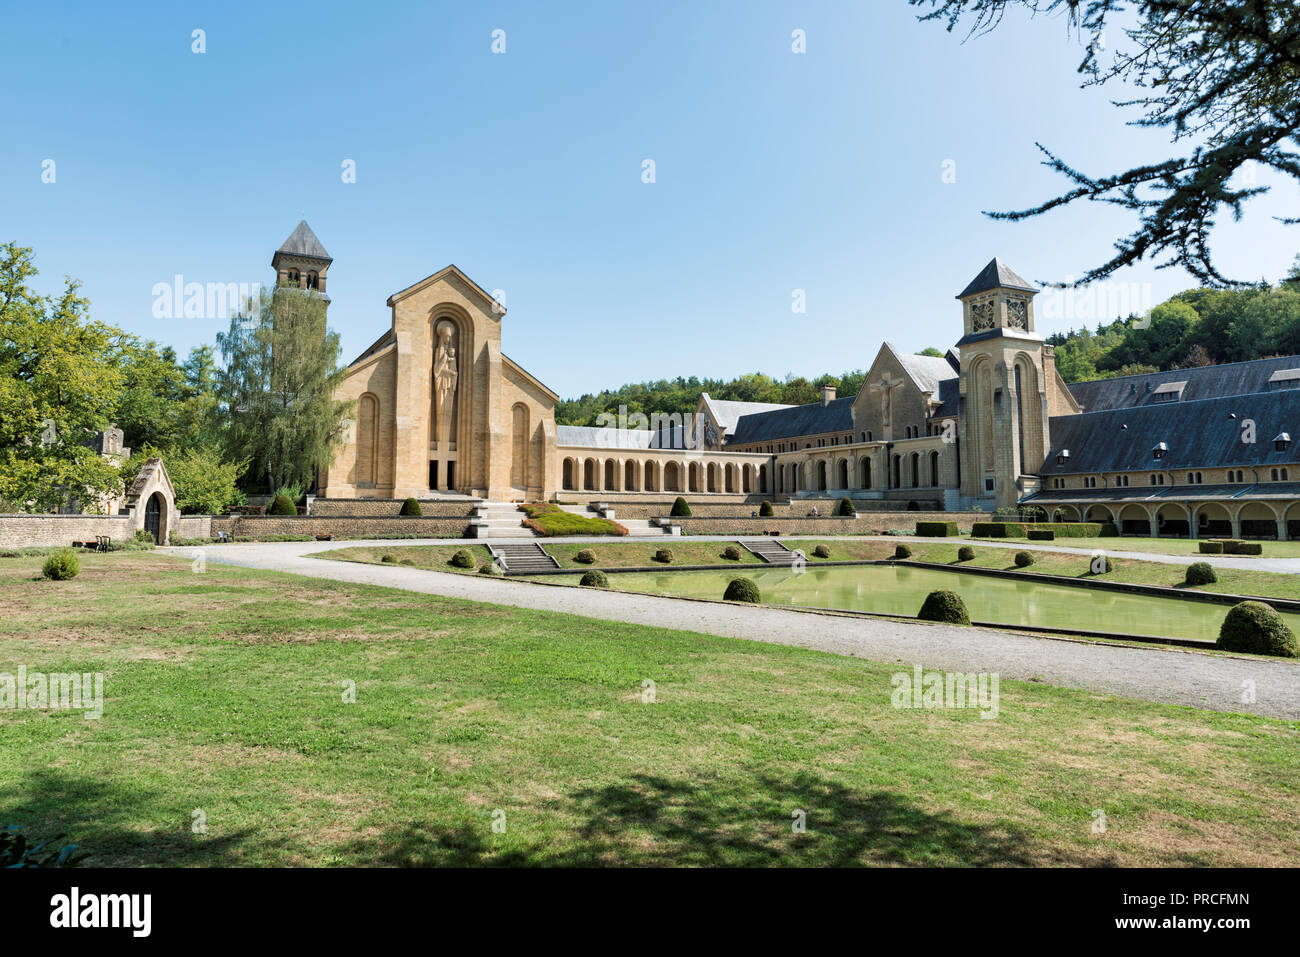 Abbazia di Orval Abbaye Notre Dame d'Orval, monastero cistercense a Villers-DEVANT-Orval, FLORENVILLE, Ardenne belghe, Belgio Foto Stock